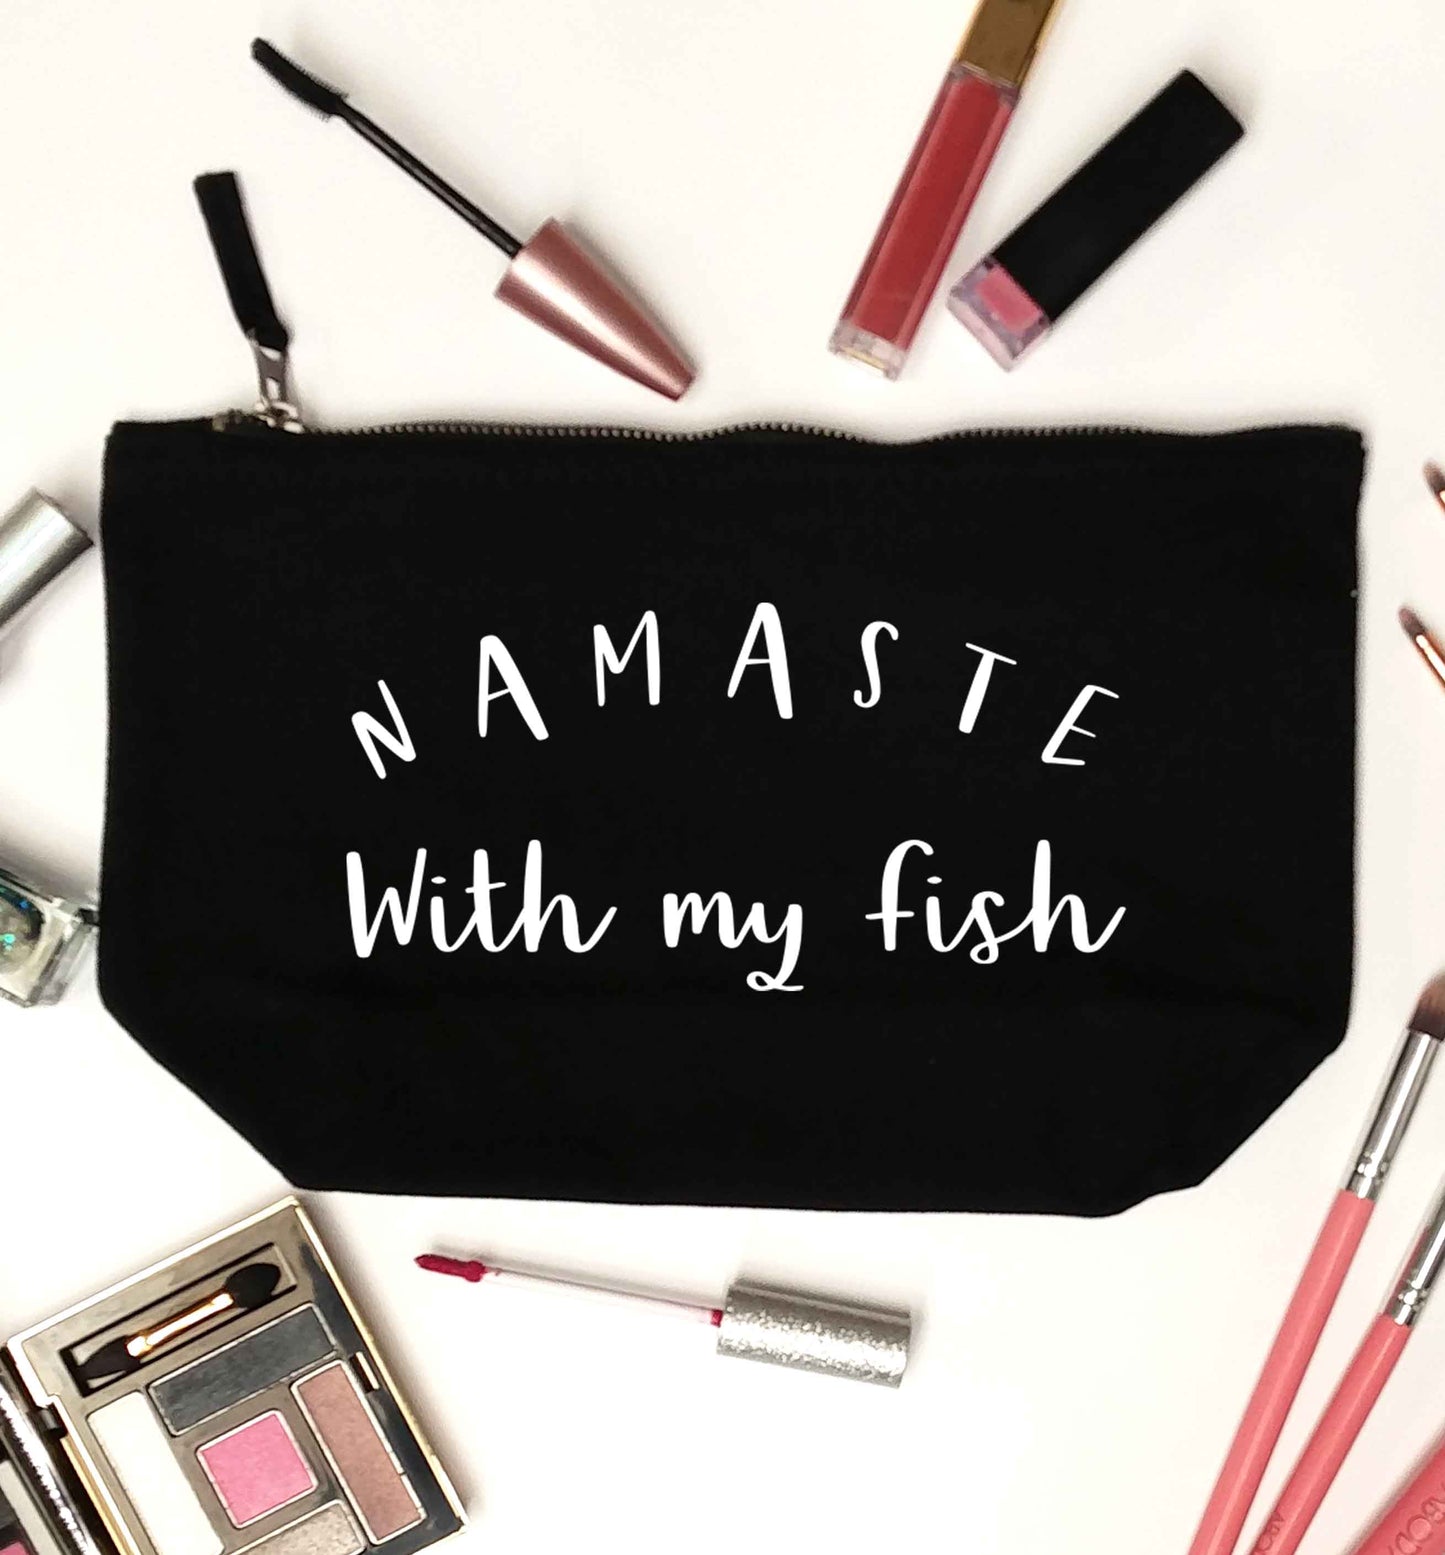 Namaste with my fish black makeup bag